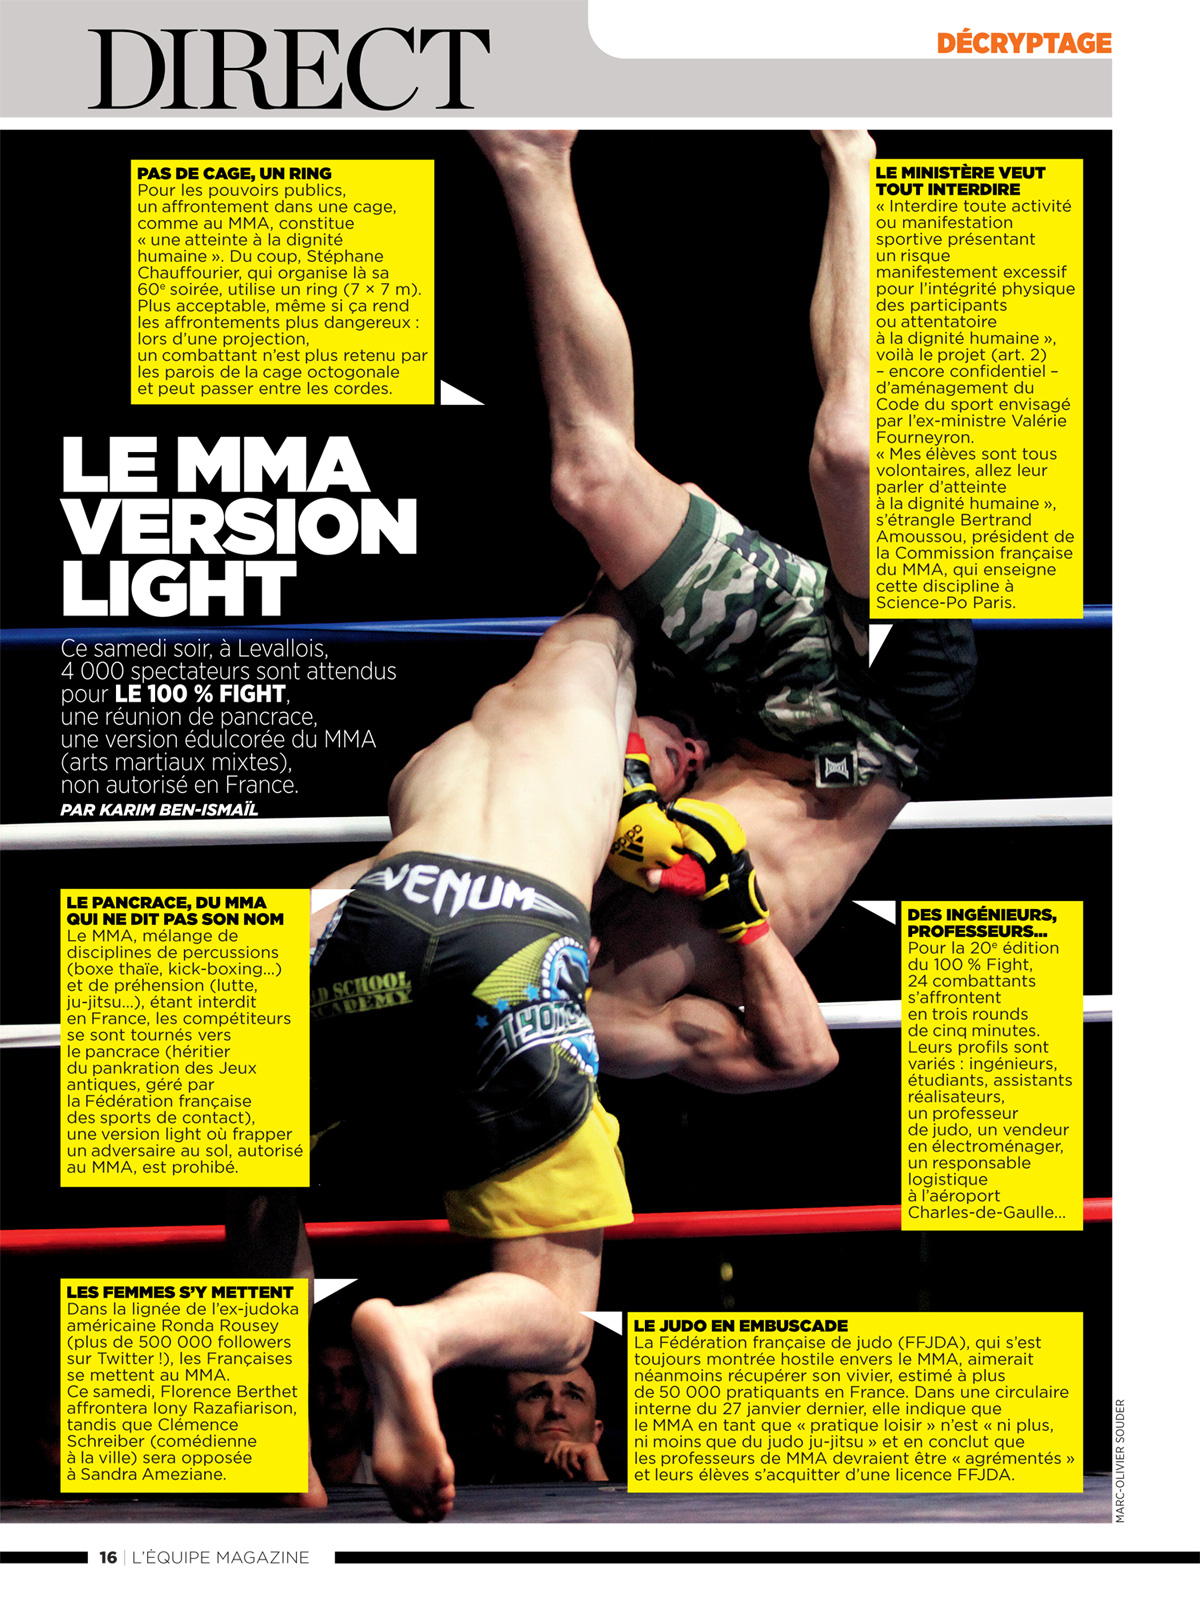 L'équipe magazine, 1655, Avril 2014, MMA version light, pancrace